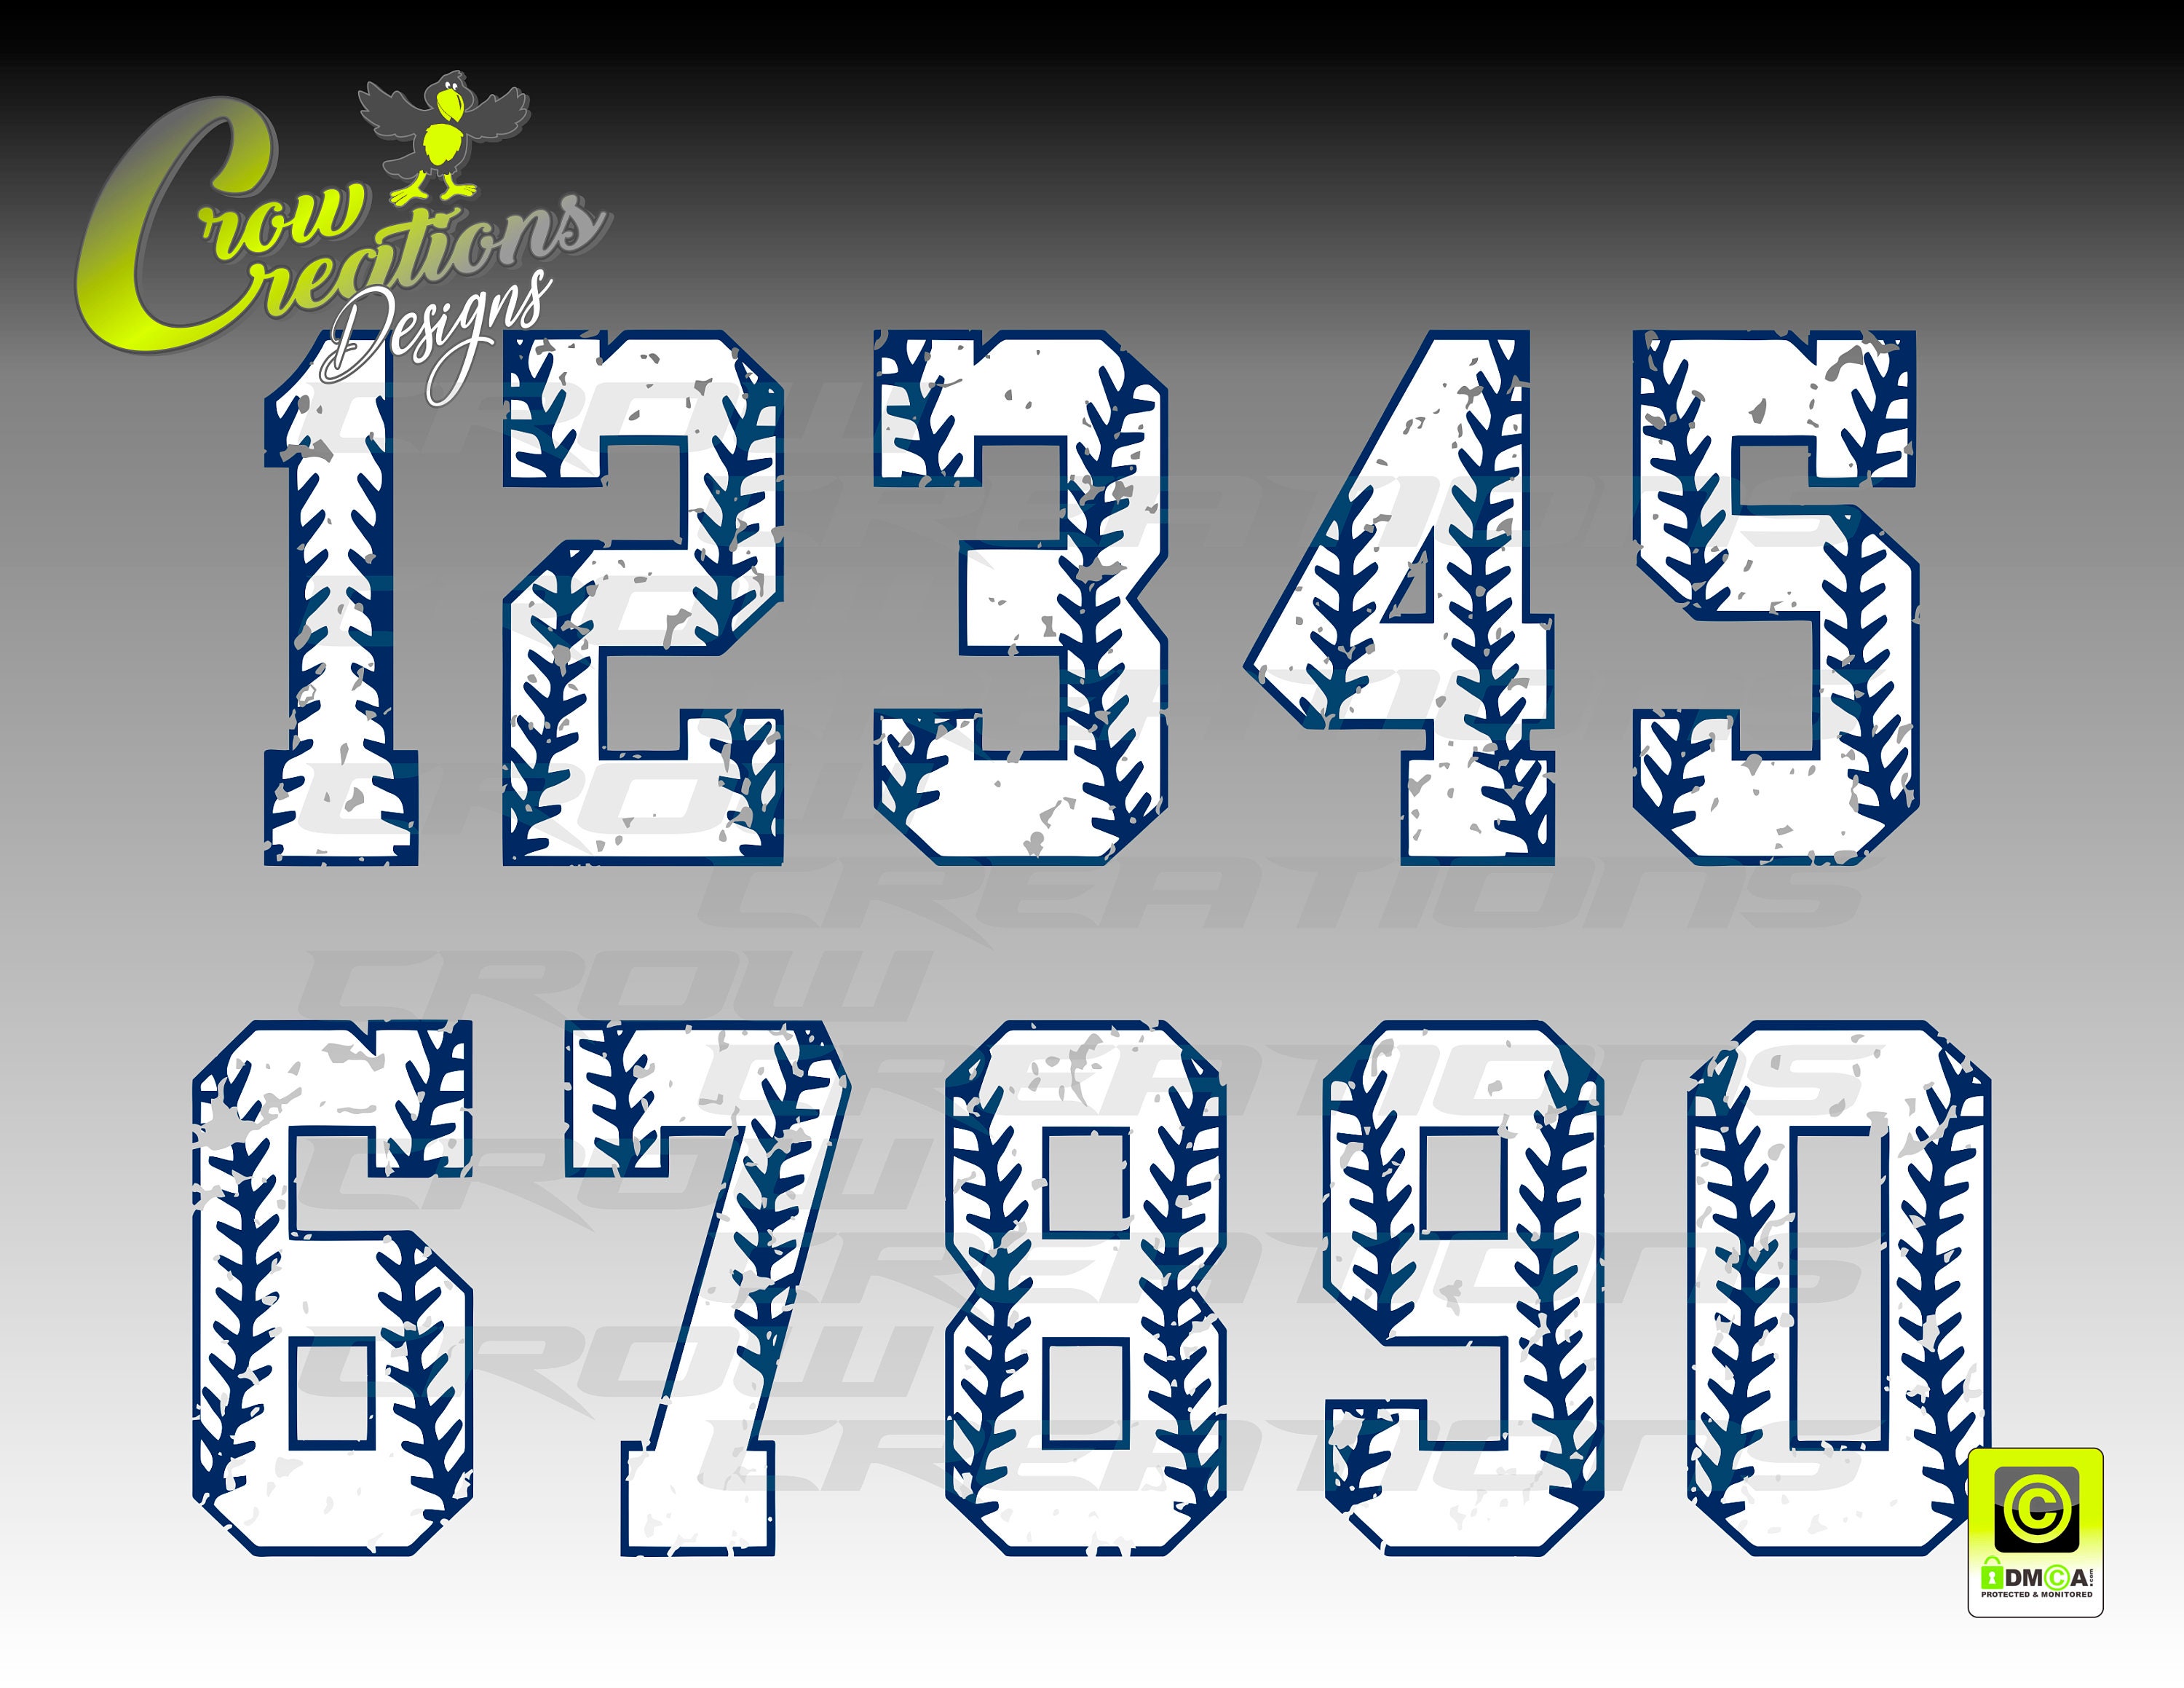 font baseball jersey numbers